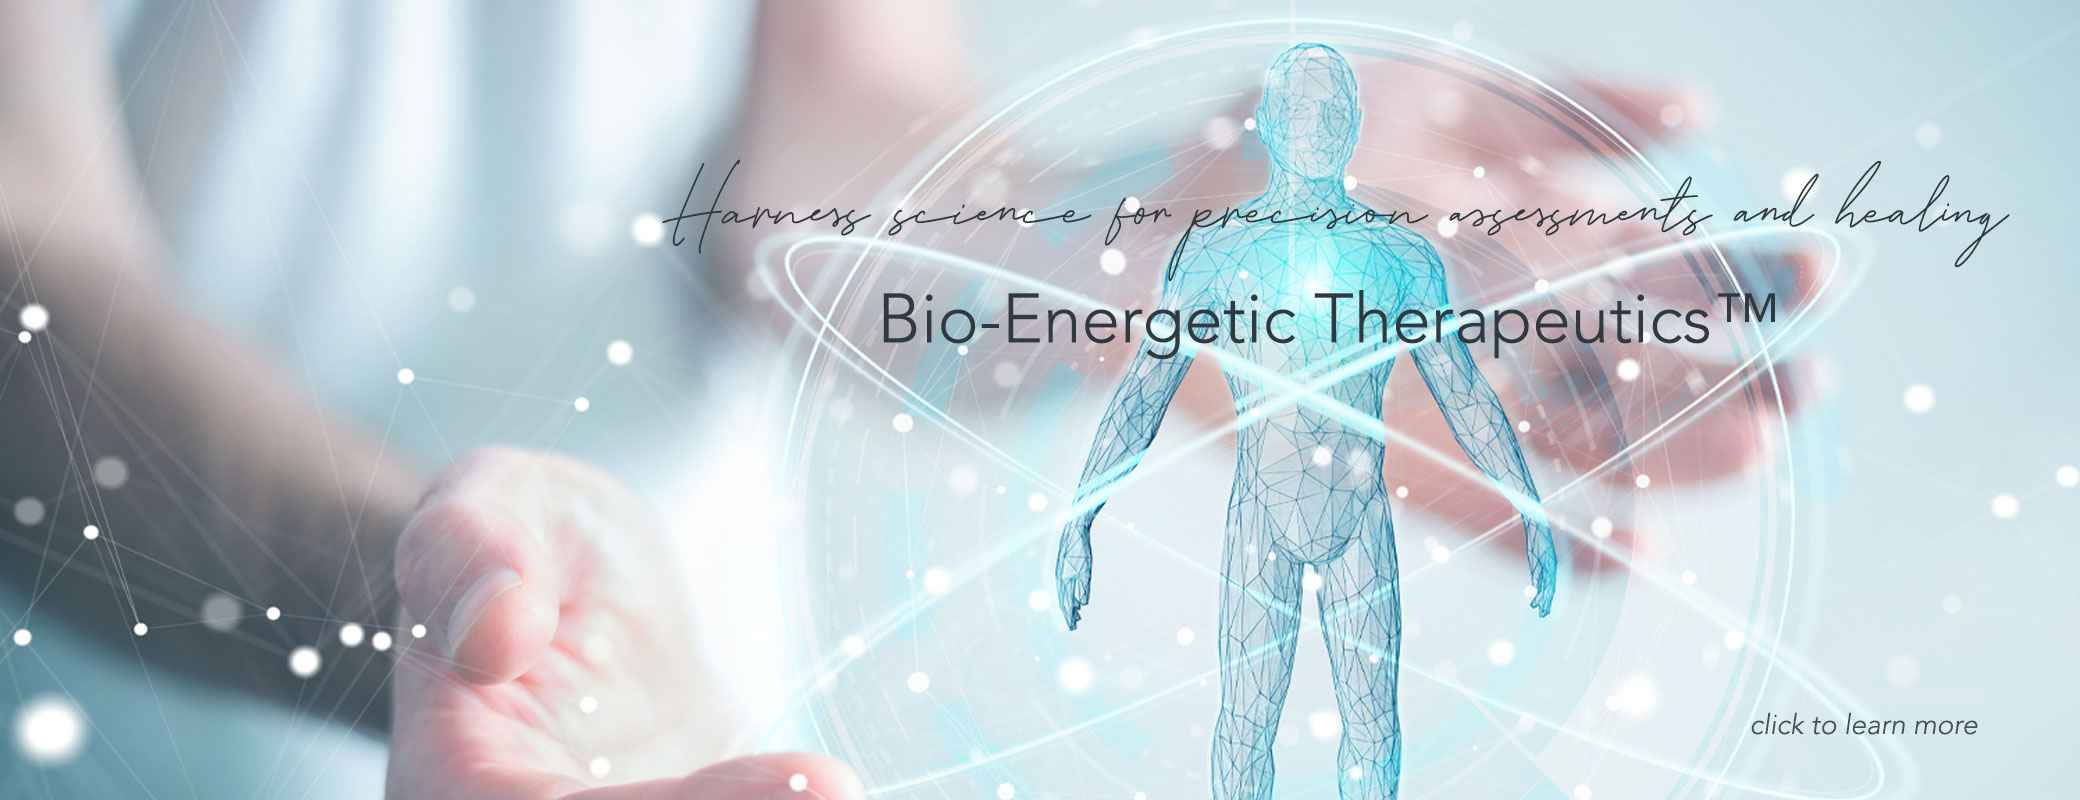 bioenergetic-therapeutics